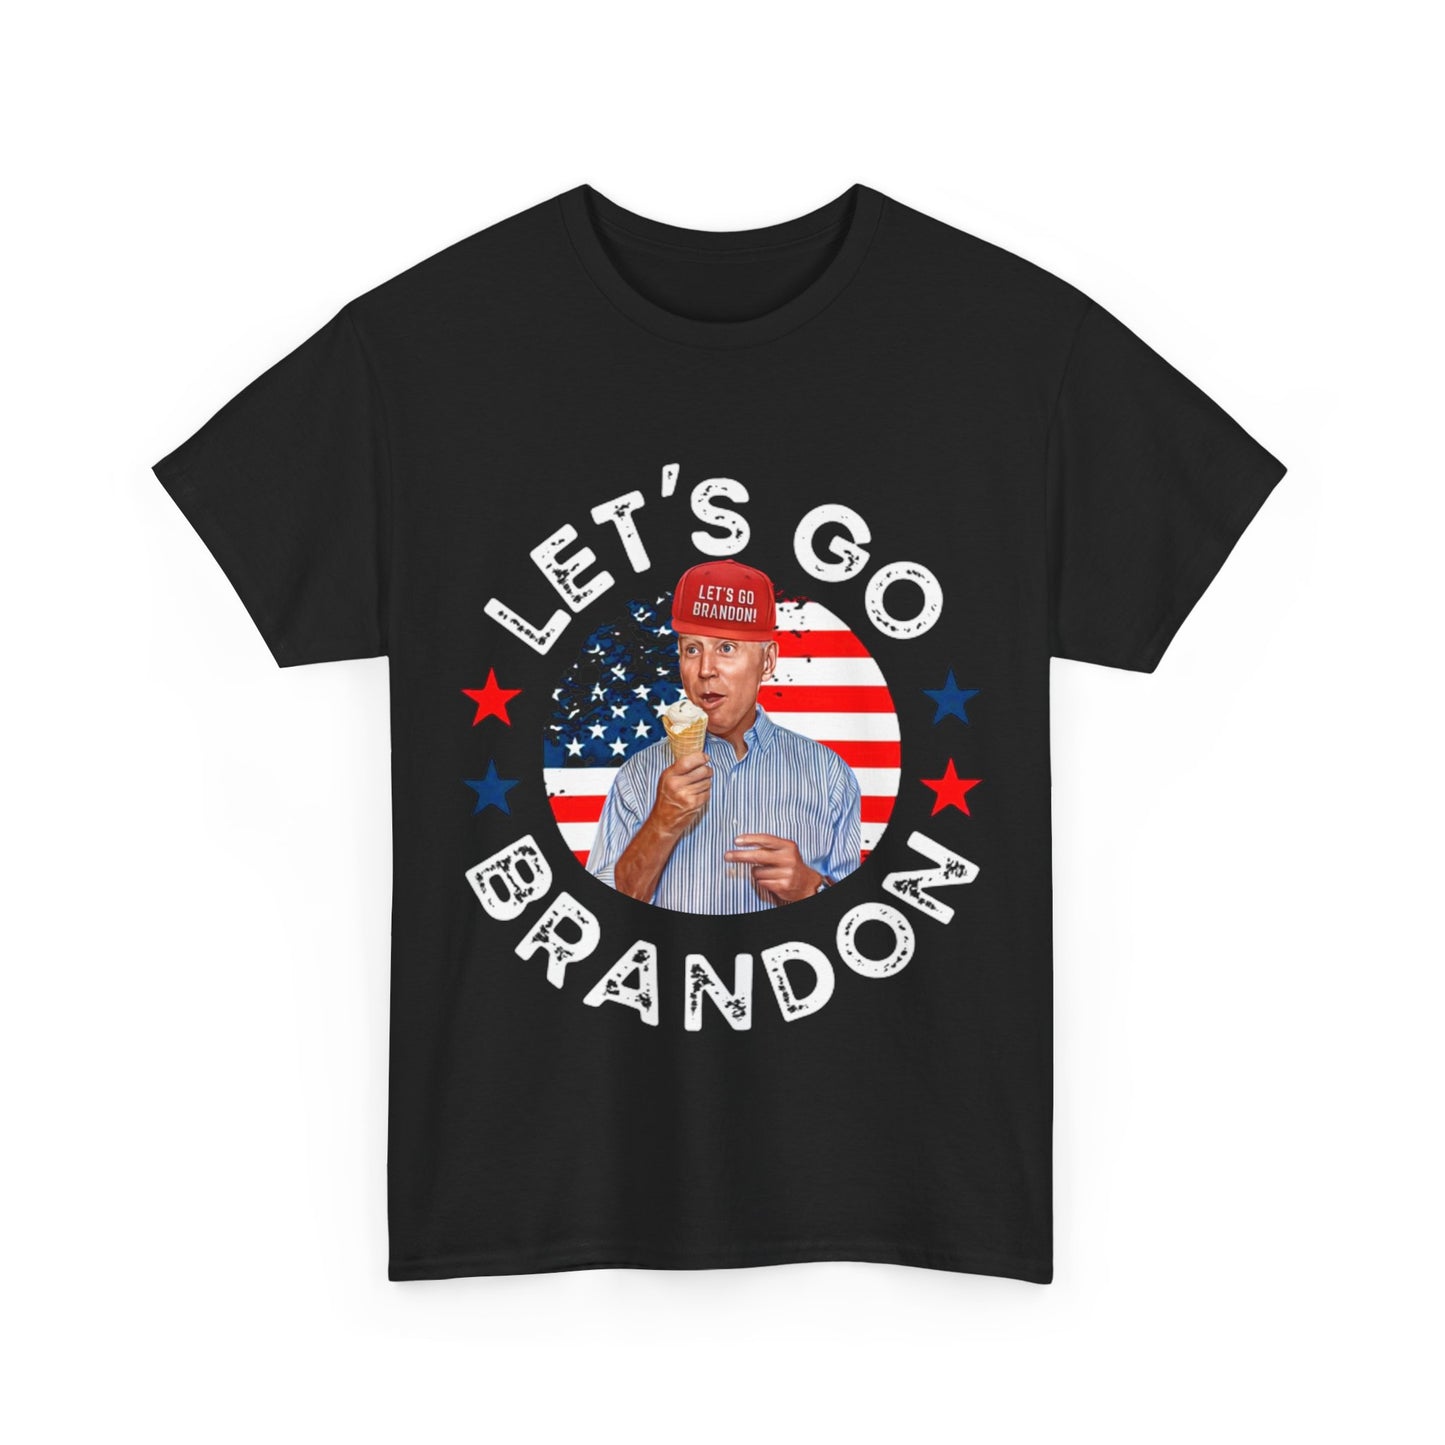 Let's go Brandon Shirt